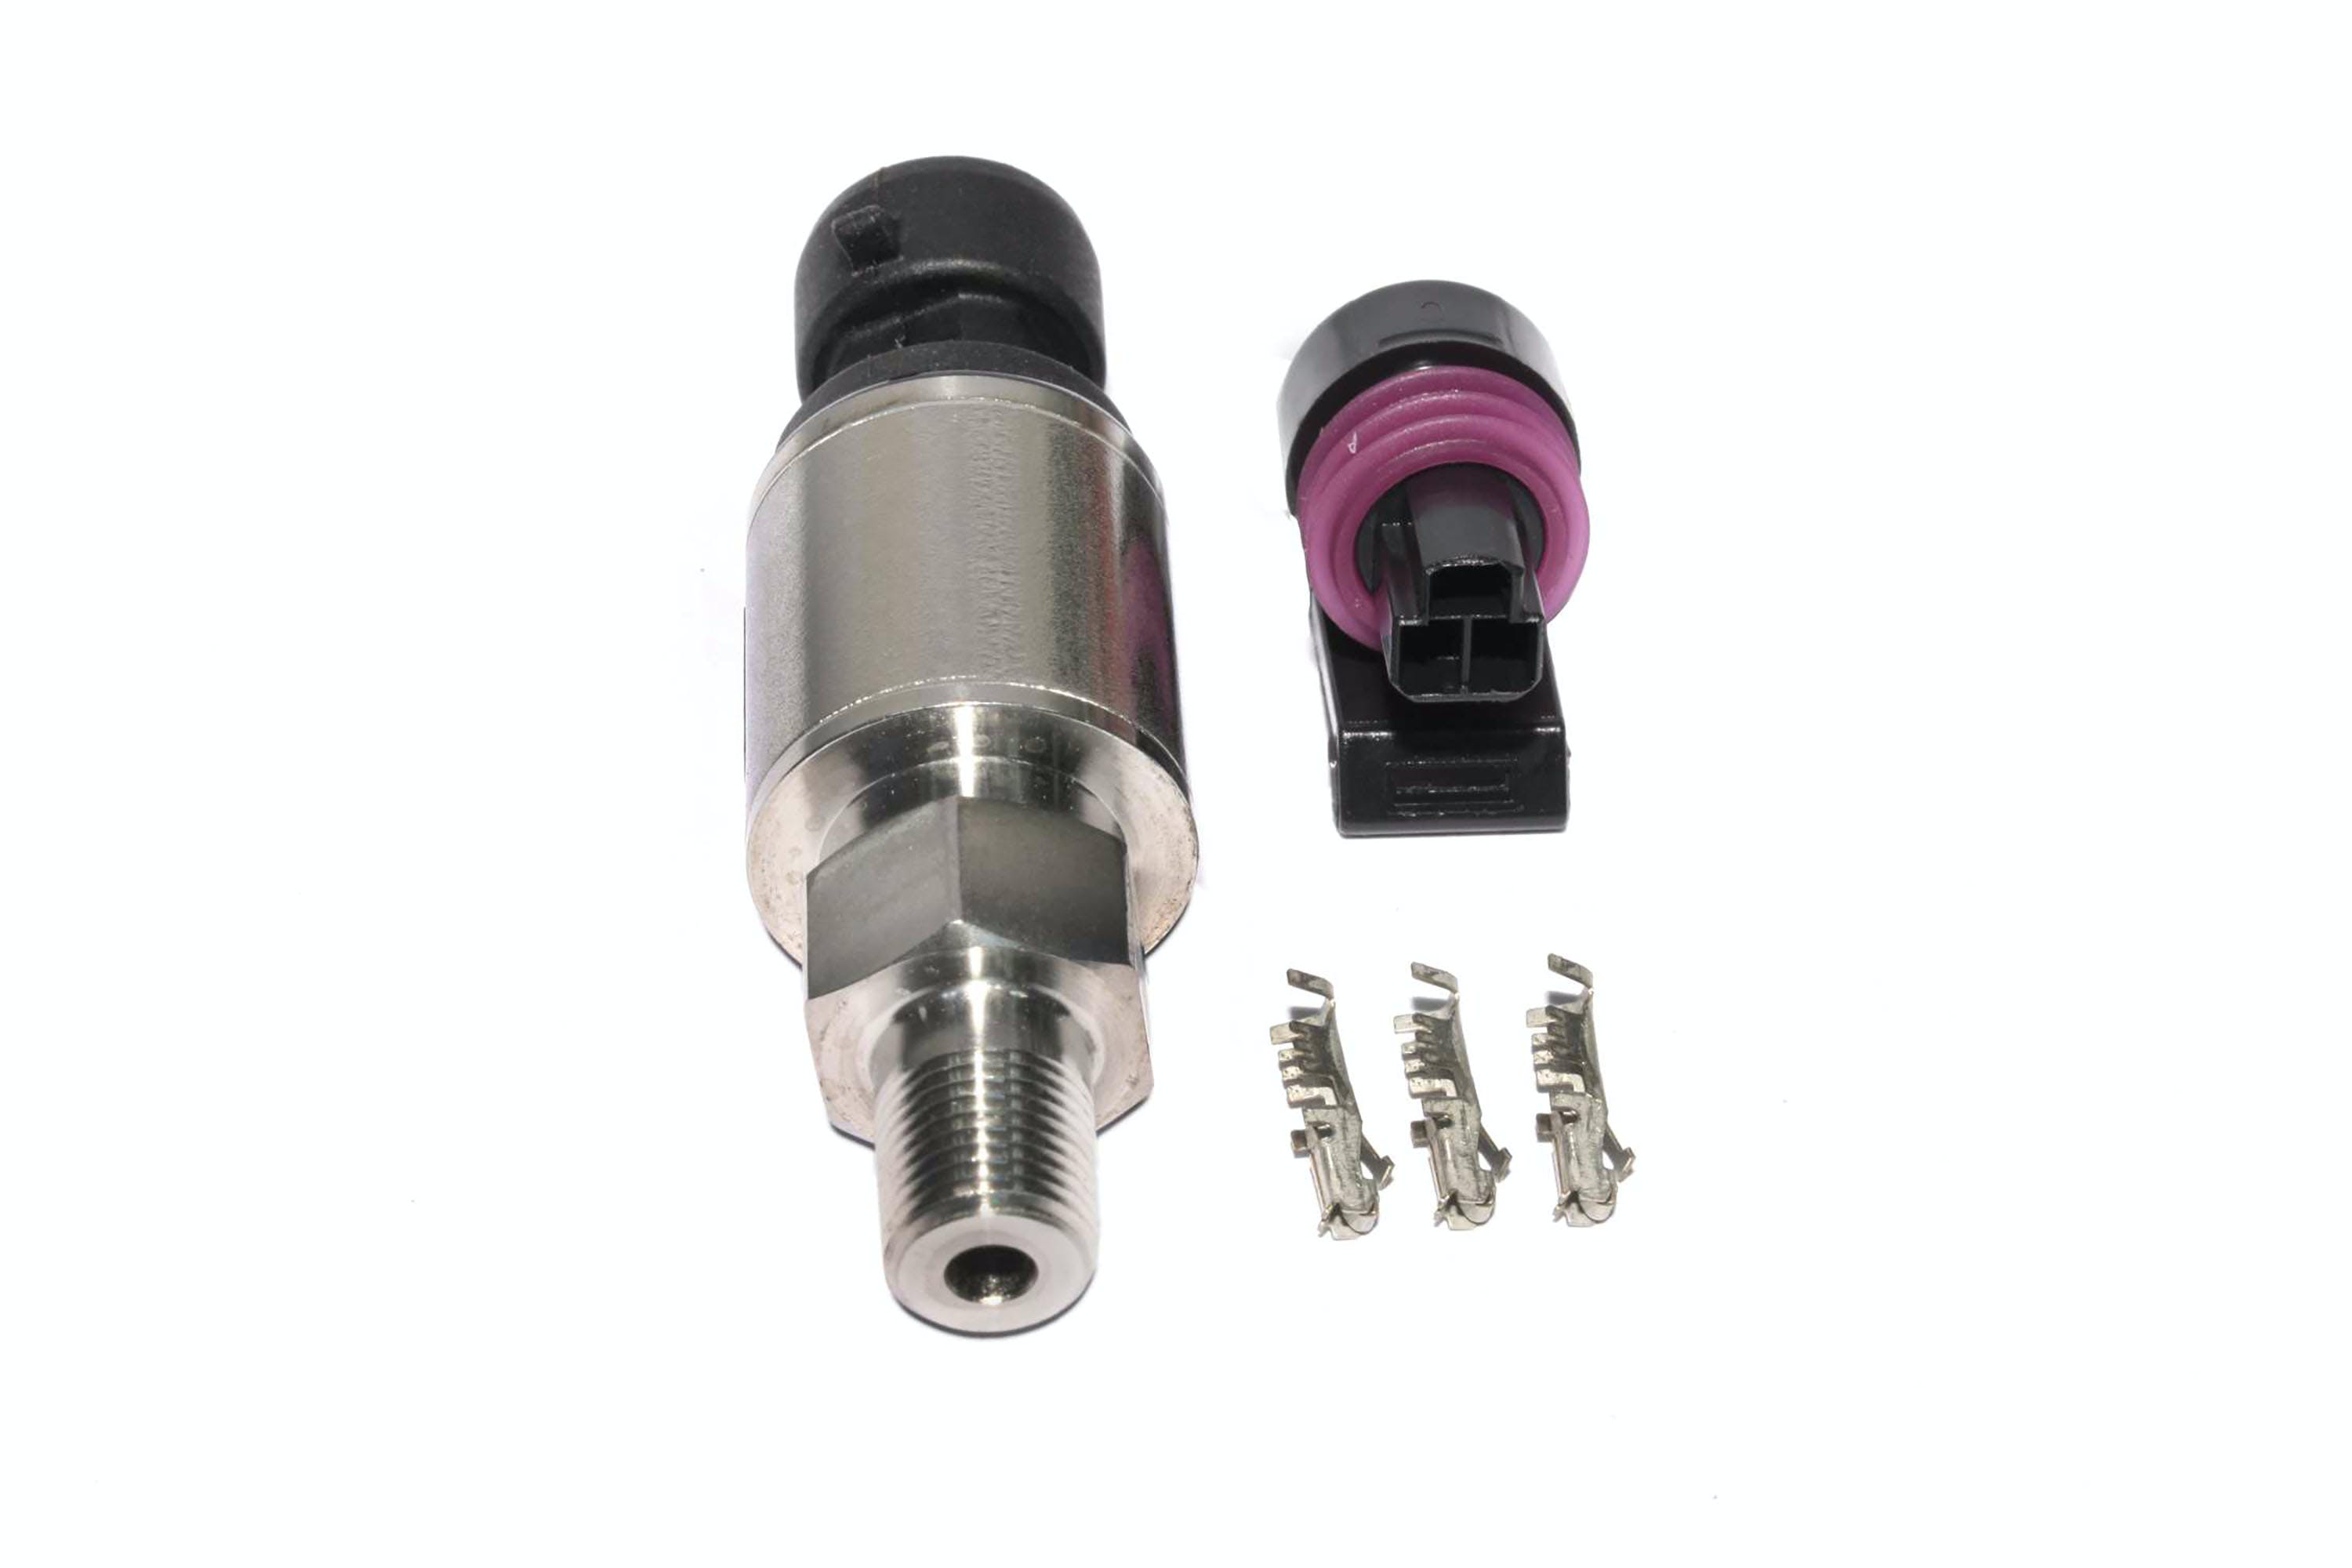 FAST - Fuel Air Spark Technology 307064 Single Pressure Sensor Kit 0 to 1500 PSI